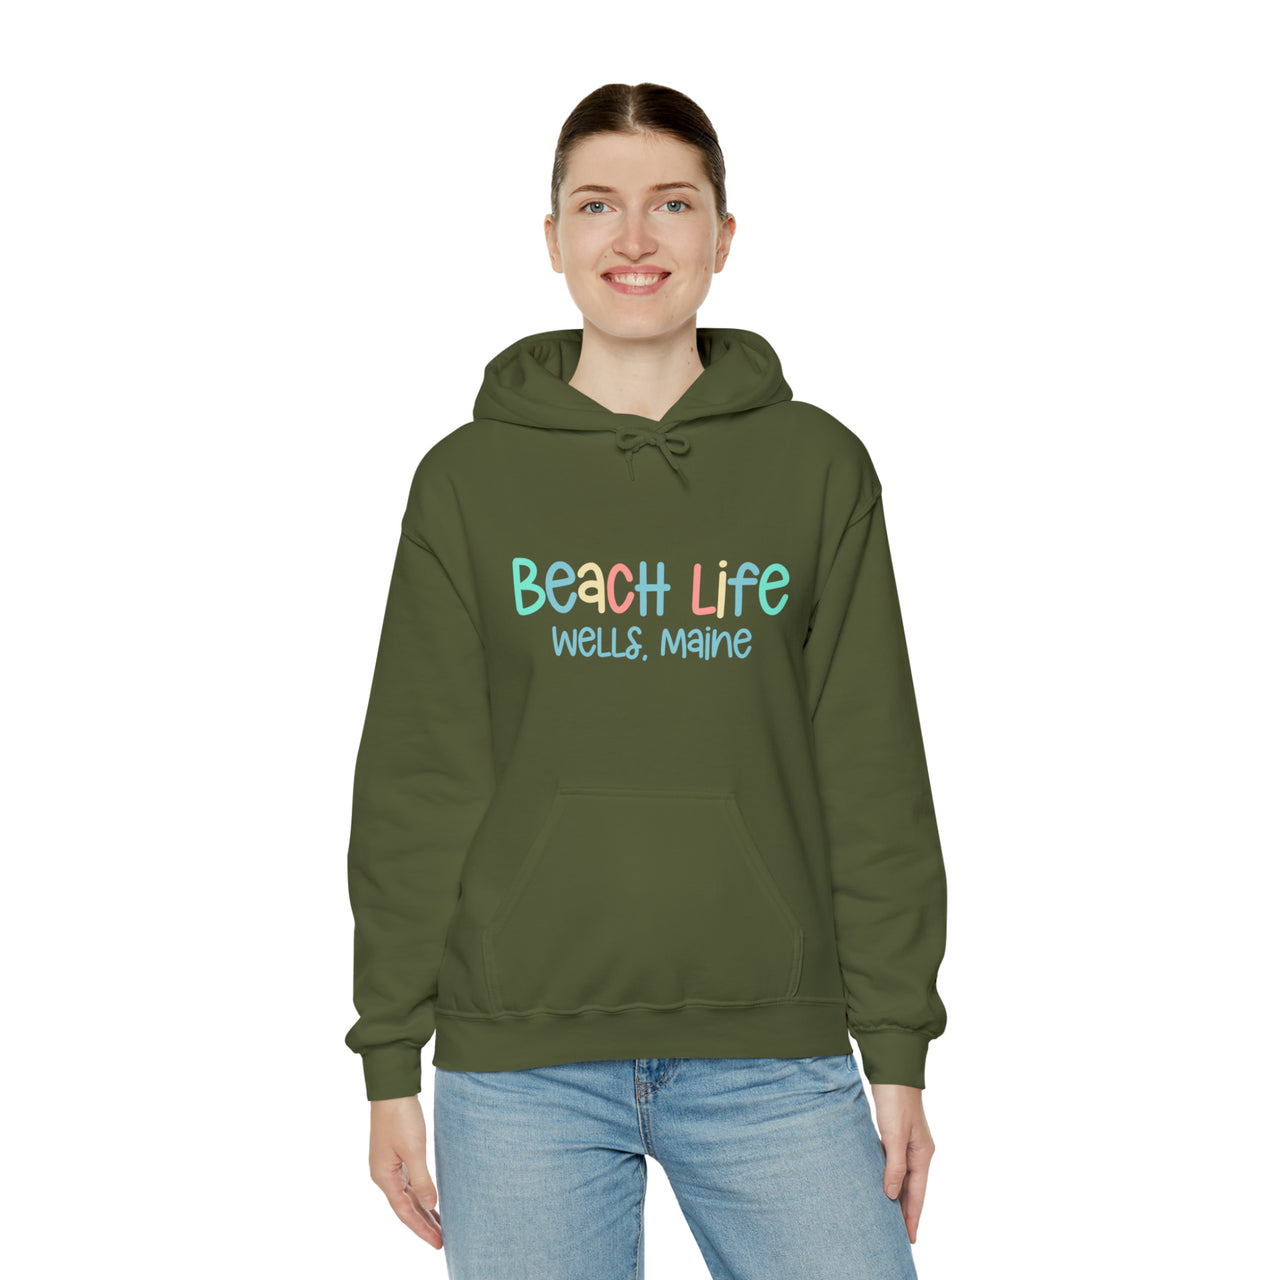 Beach Life Personalized Heavy Blend Military Green Hooded Sweatshirt